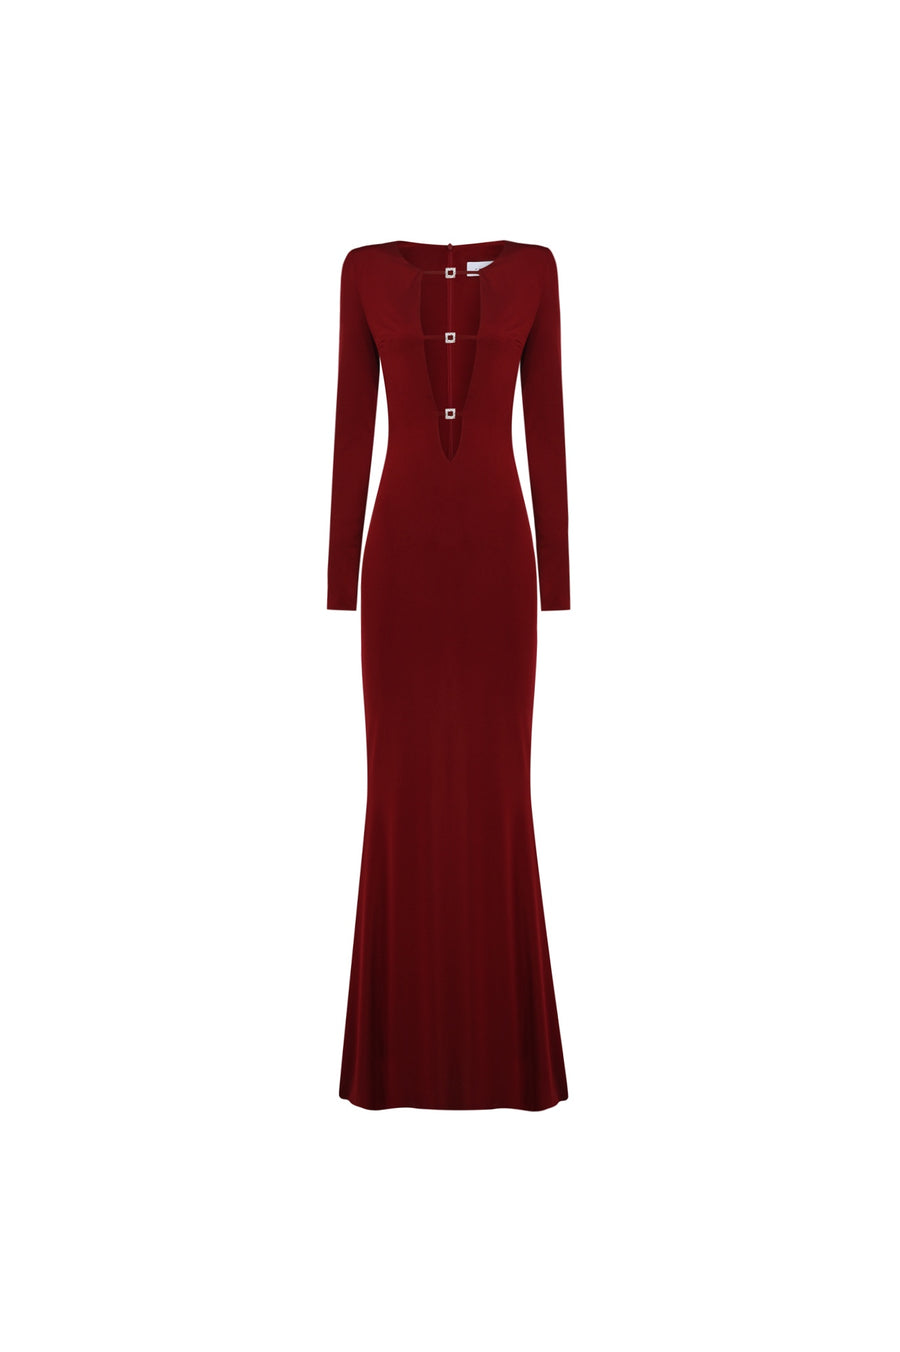 The Alba burgundy maxi dress